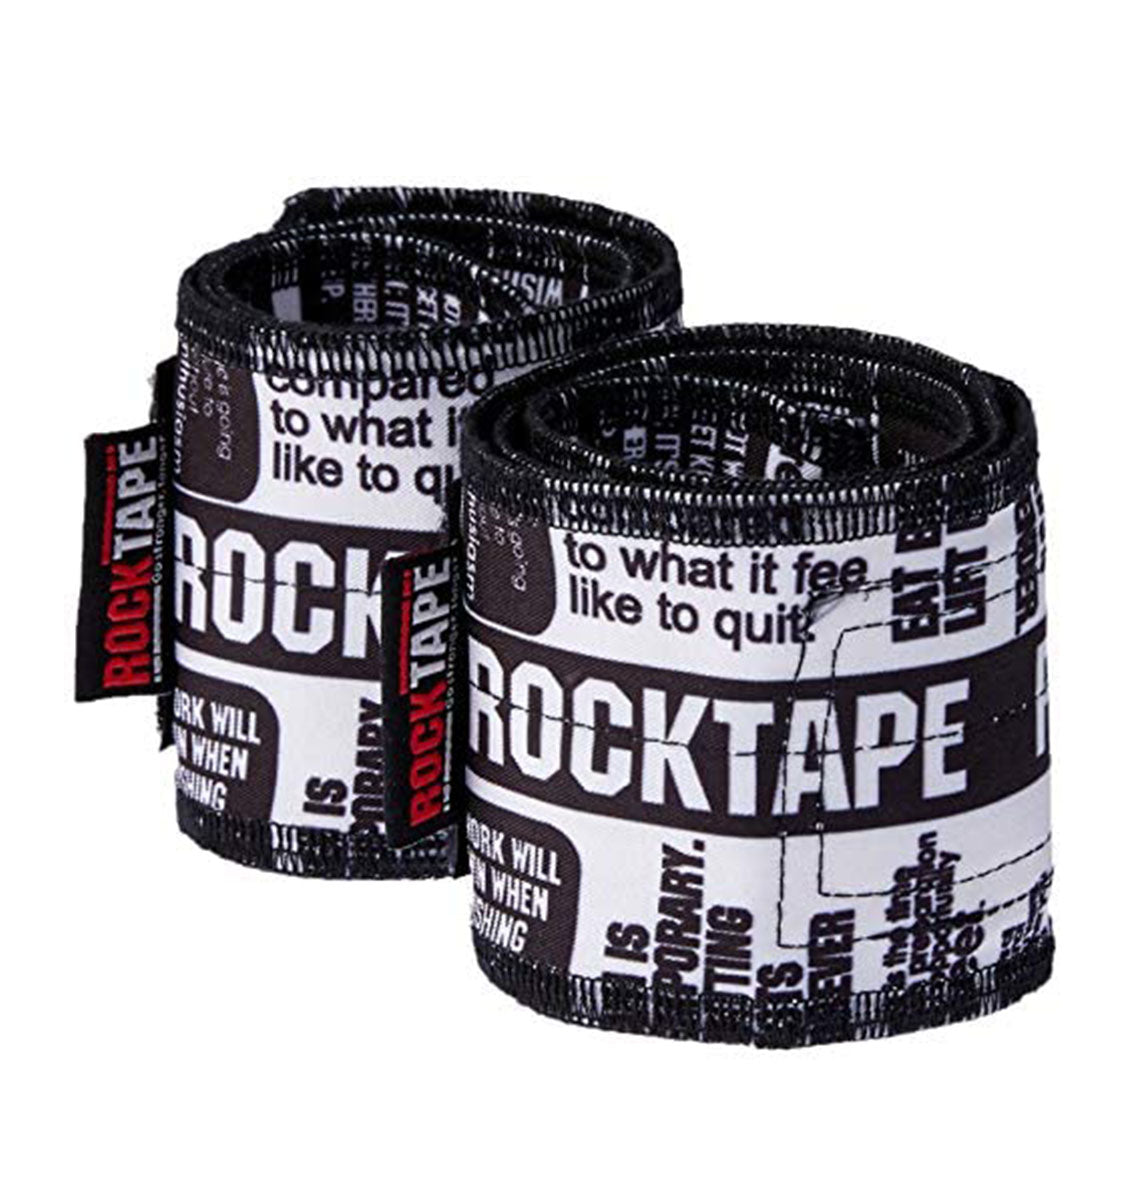 RockTape Rockwrist Wraps - Manifesto - 2